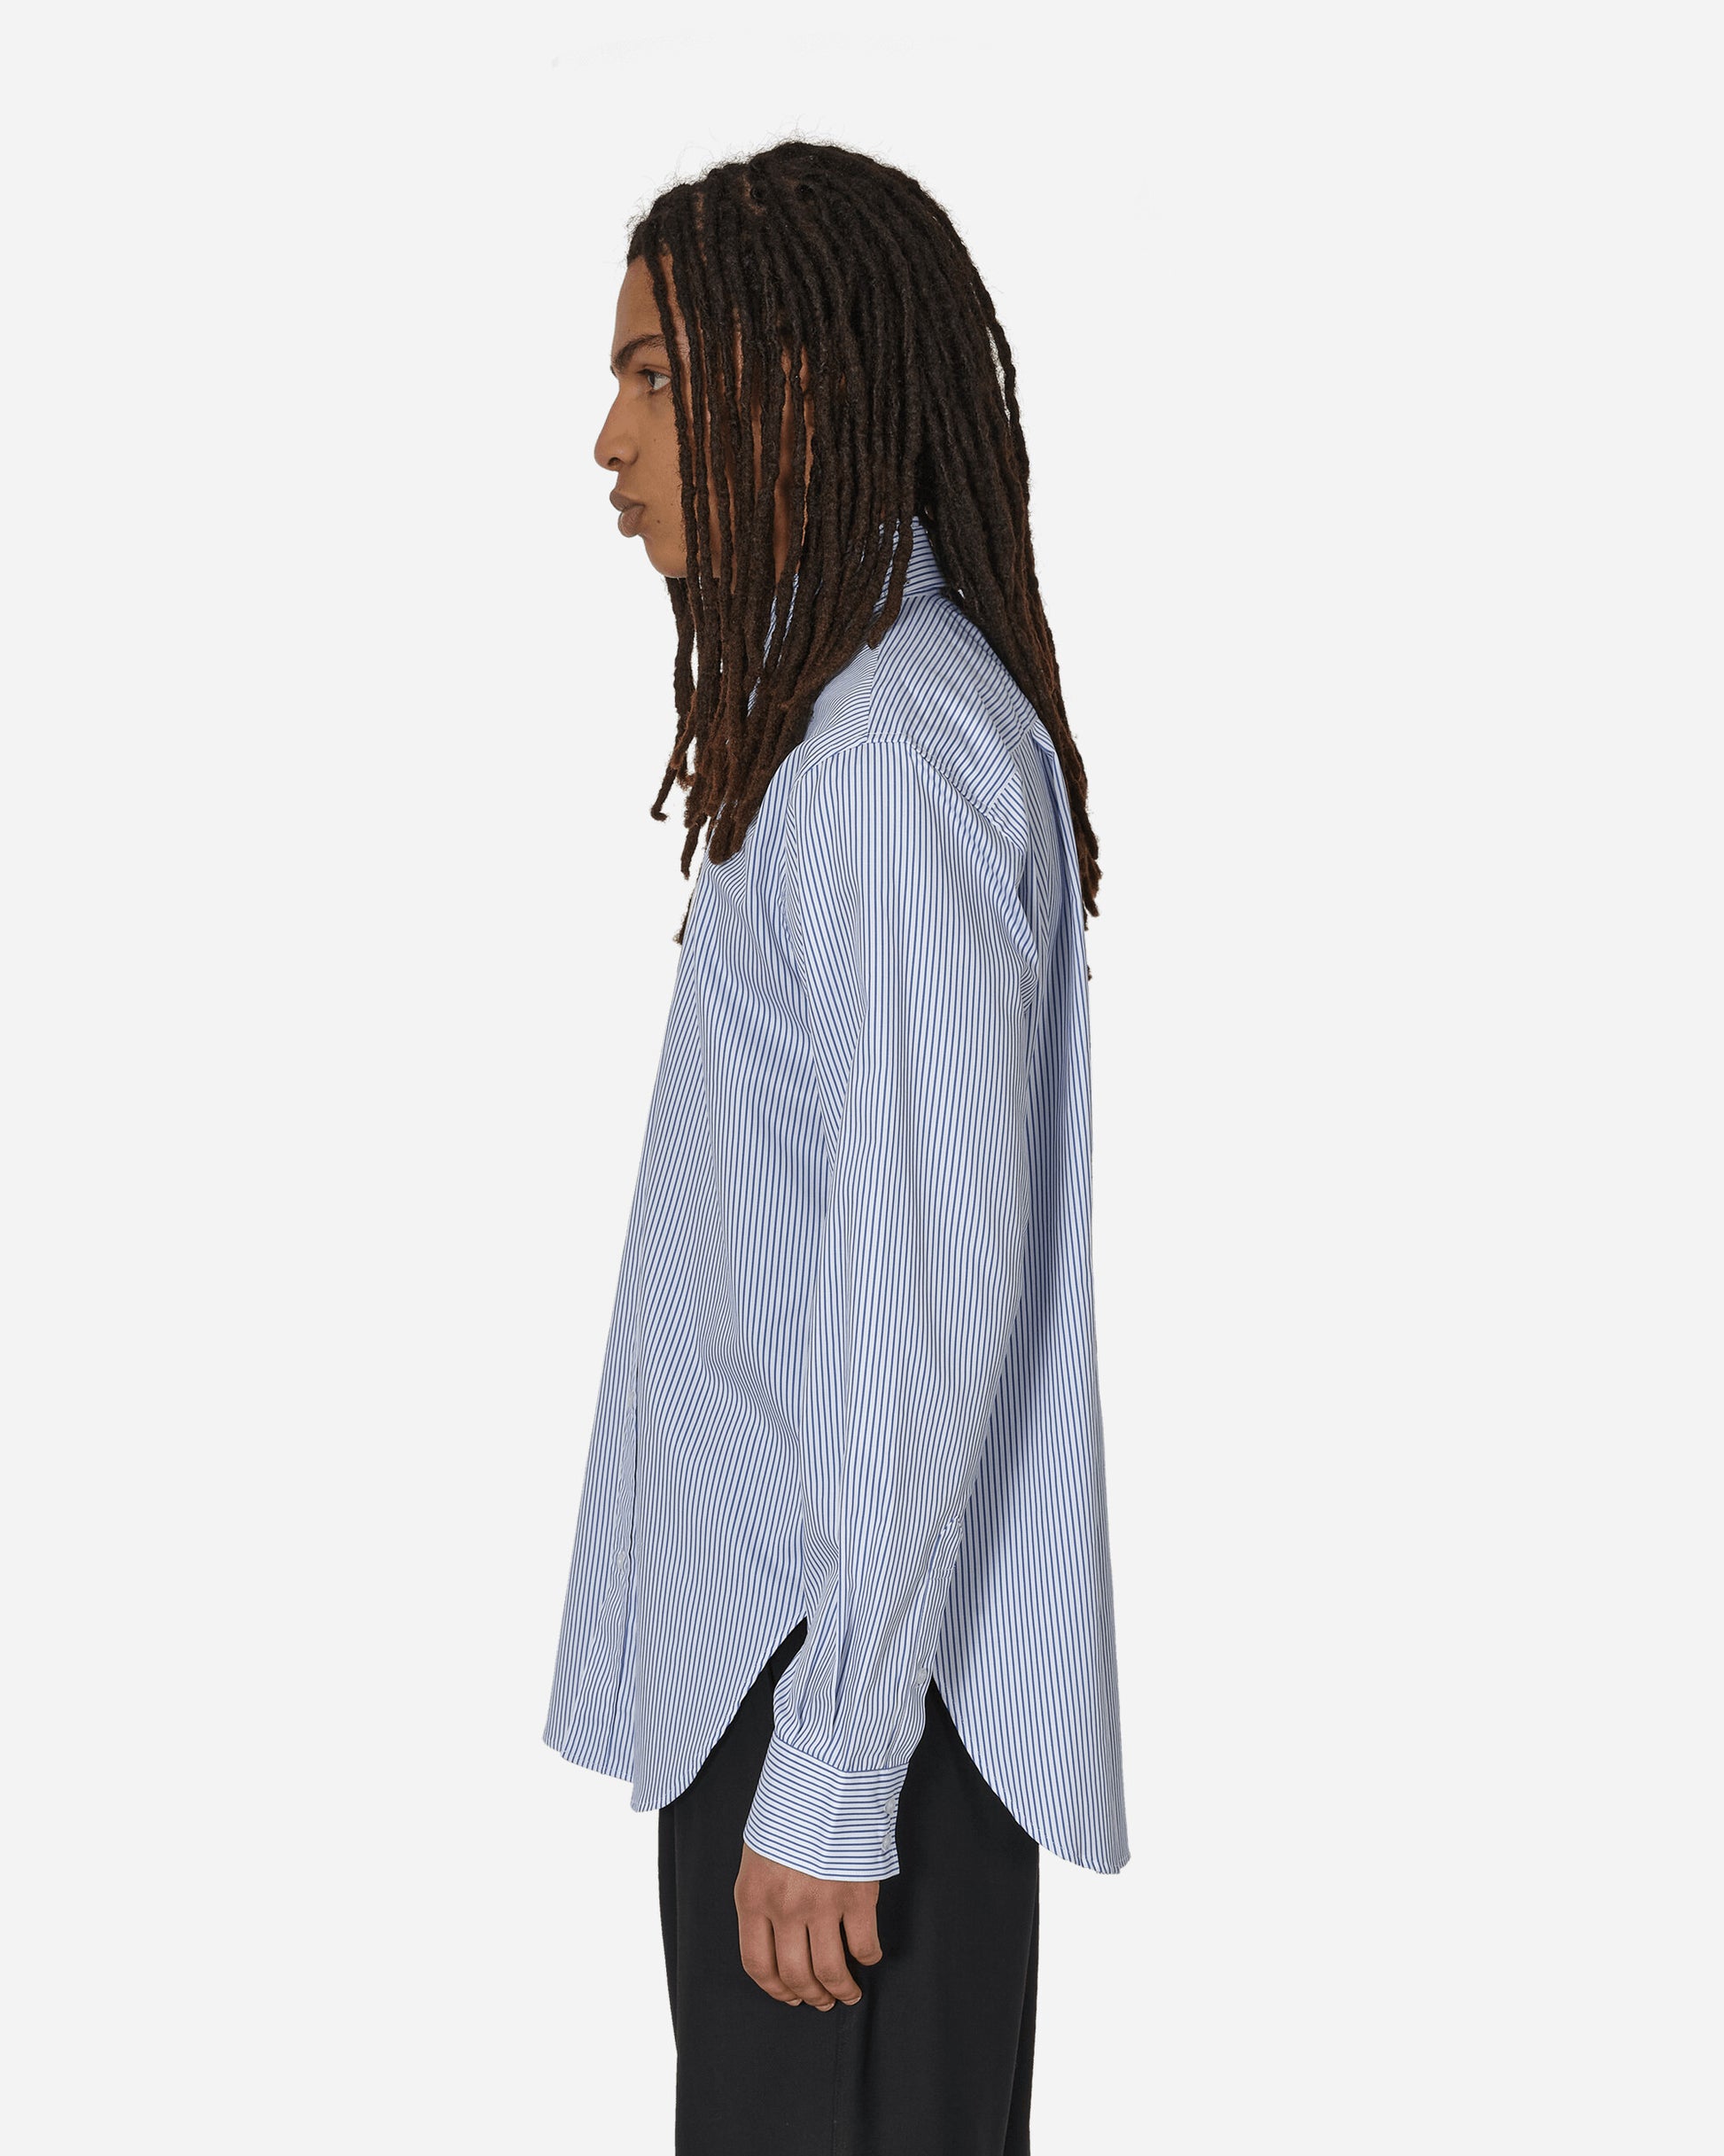 _J.L-A.L_ Triple Collar Shirting White Blue Stripe Shirts Longsleeve JBMW056FA48 WTH0007